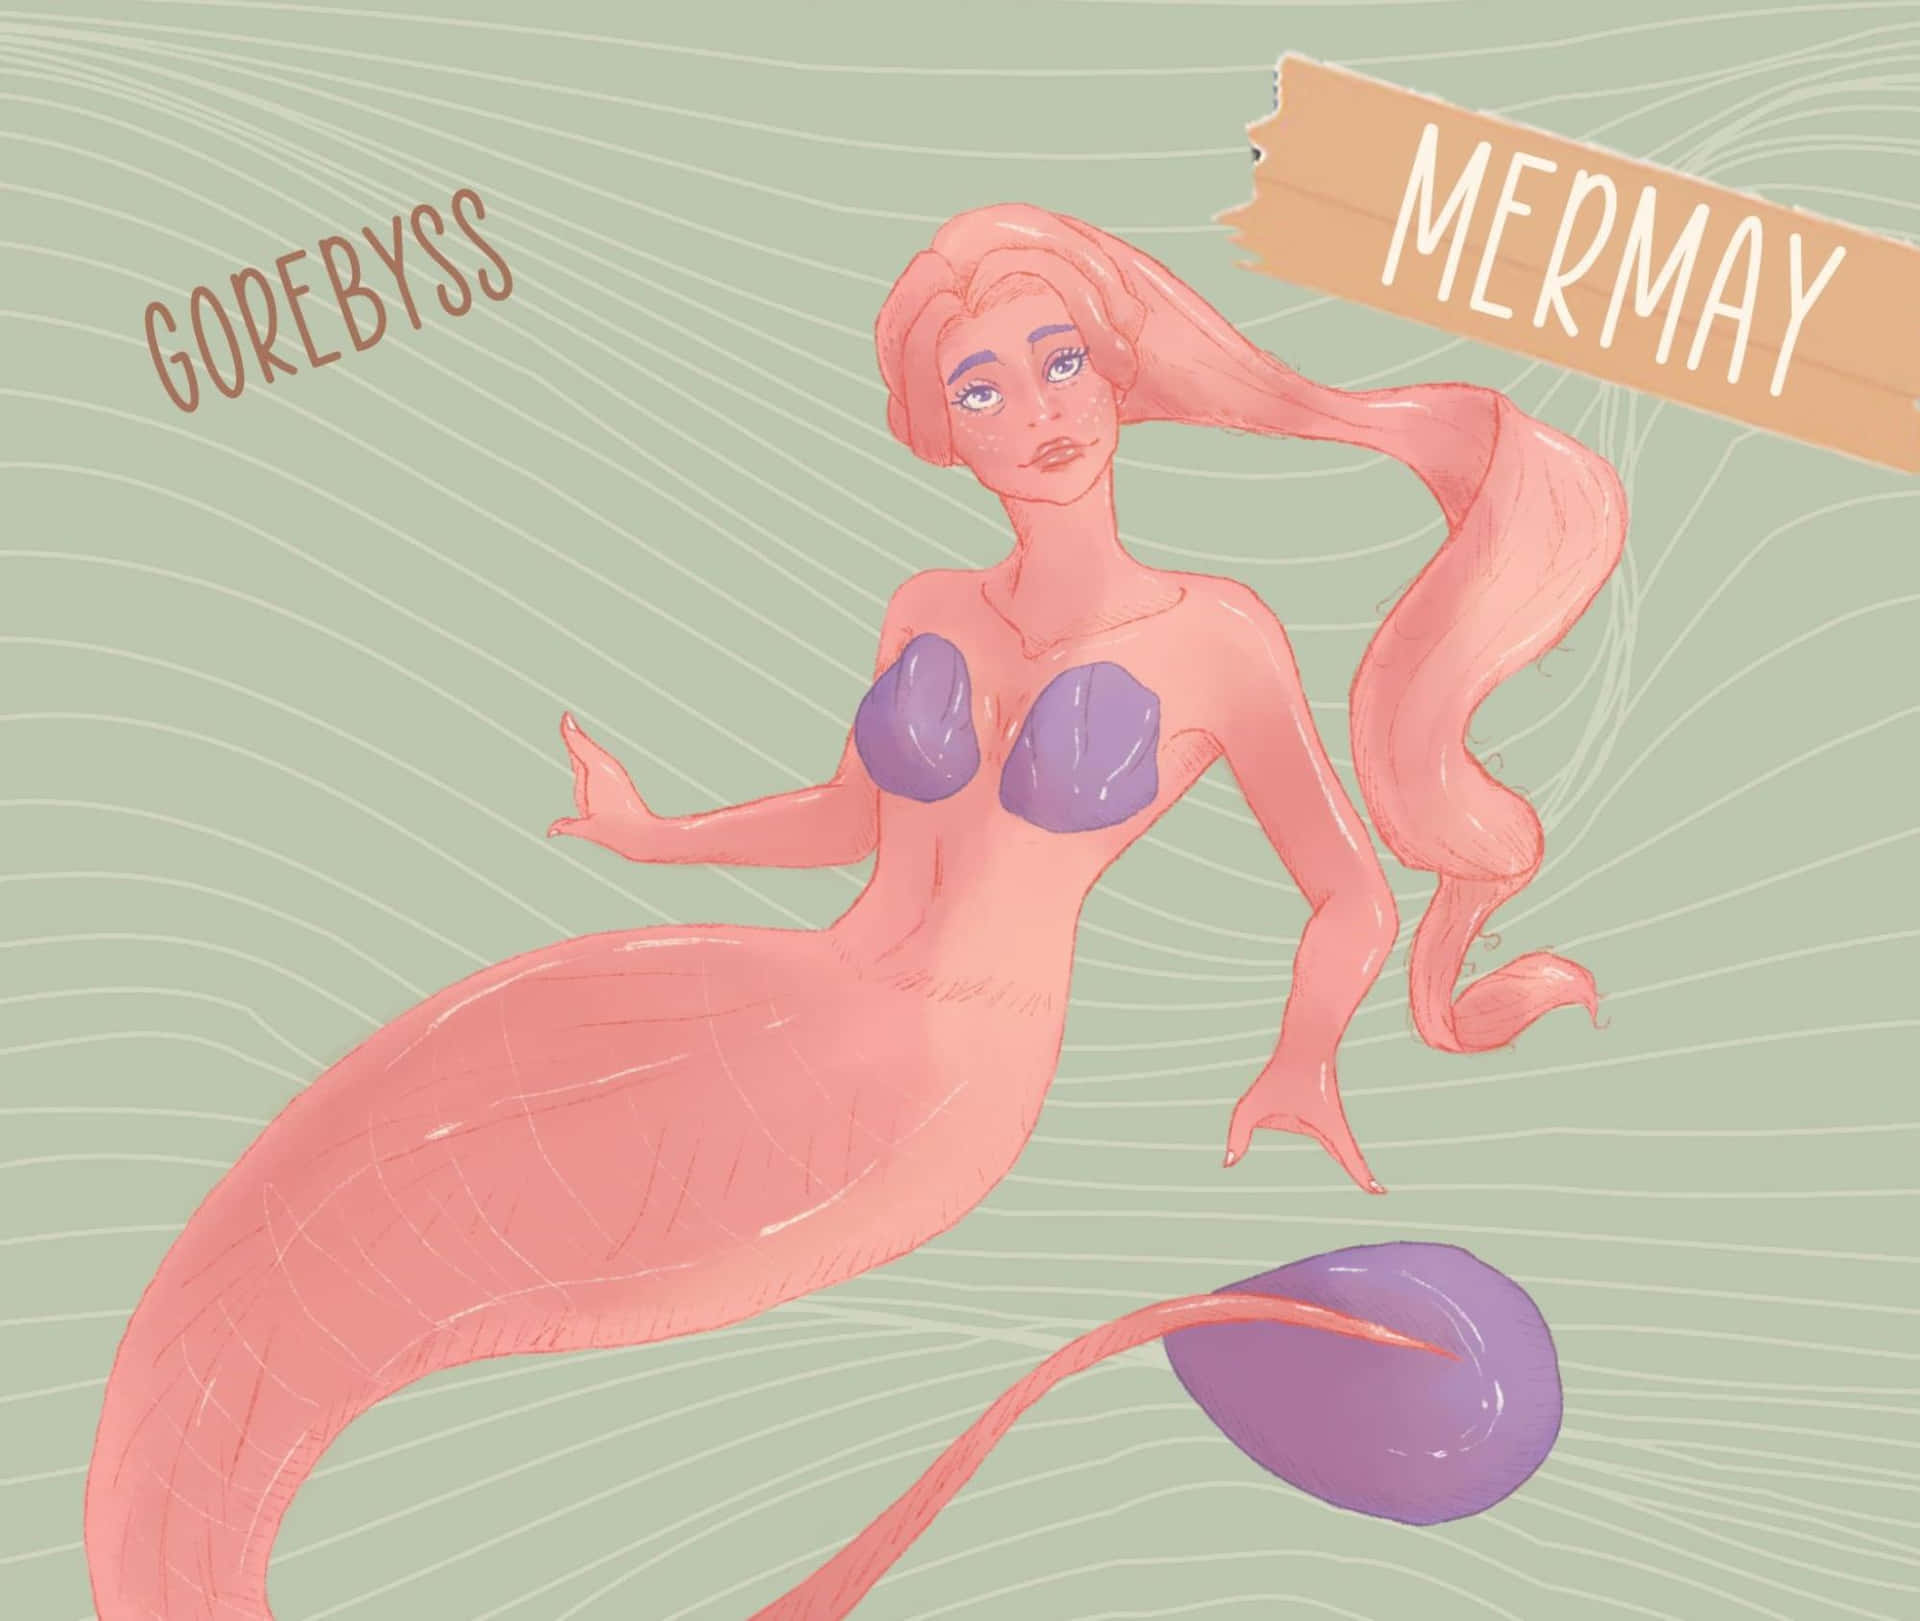 Gorebyss As A Mermaid Wallpaper